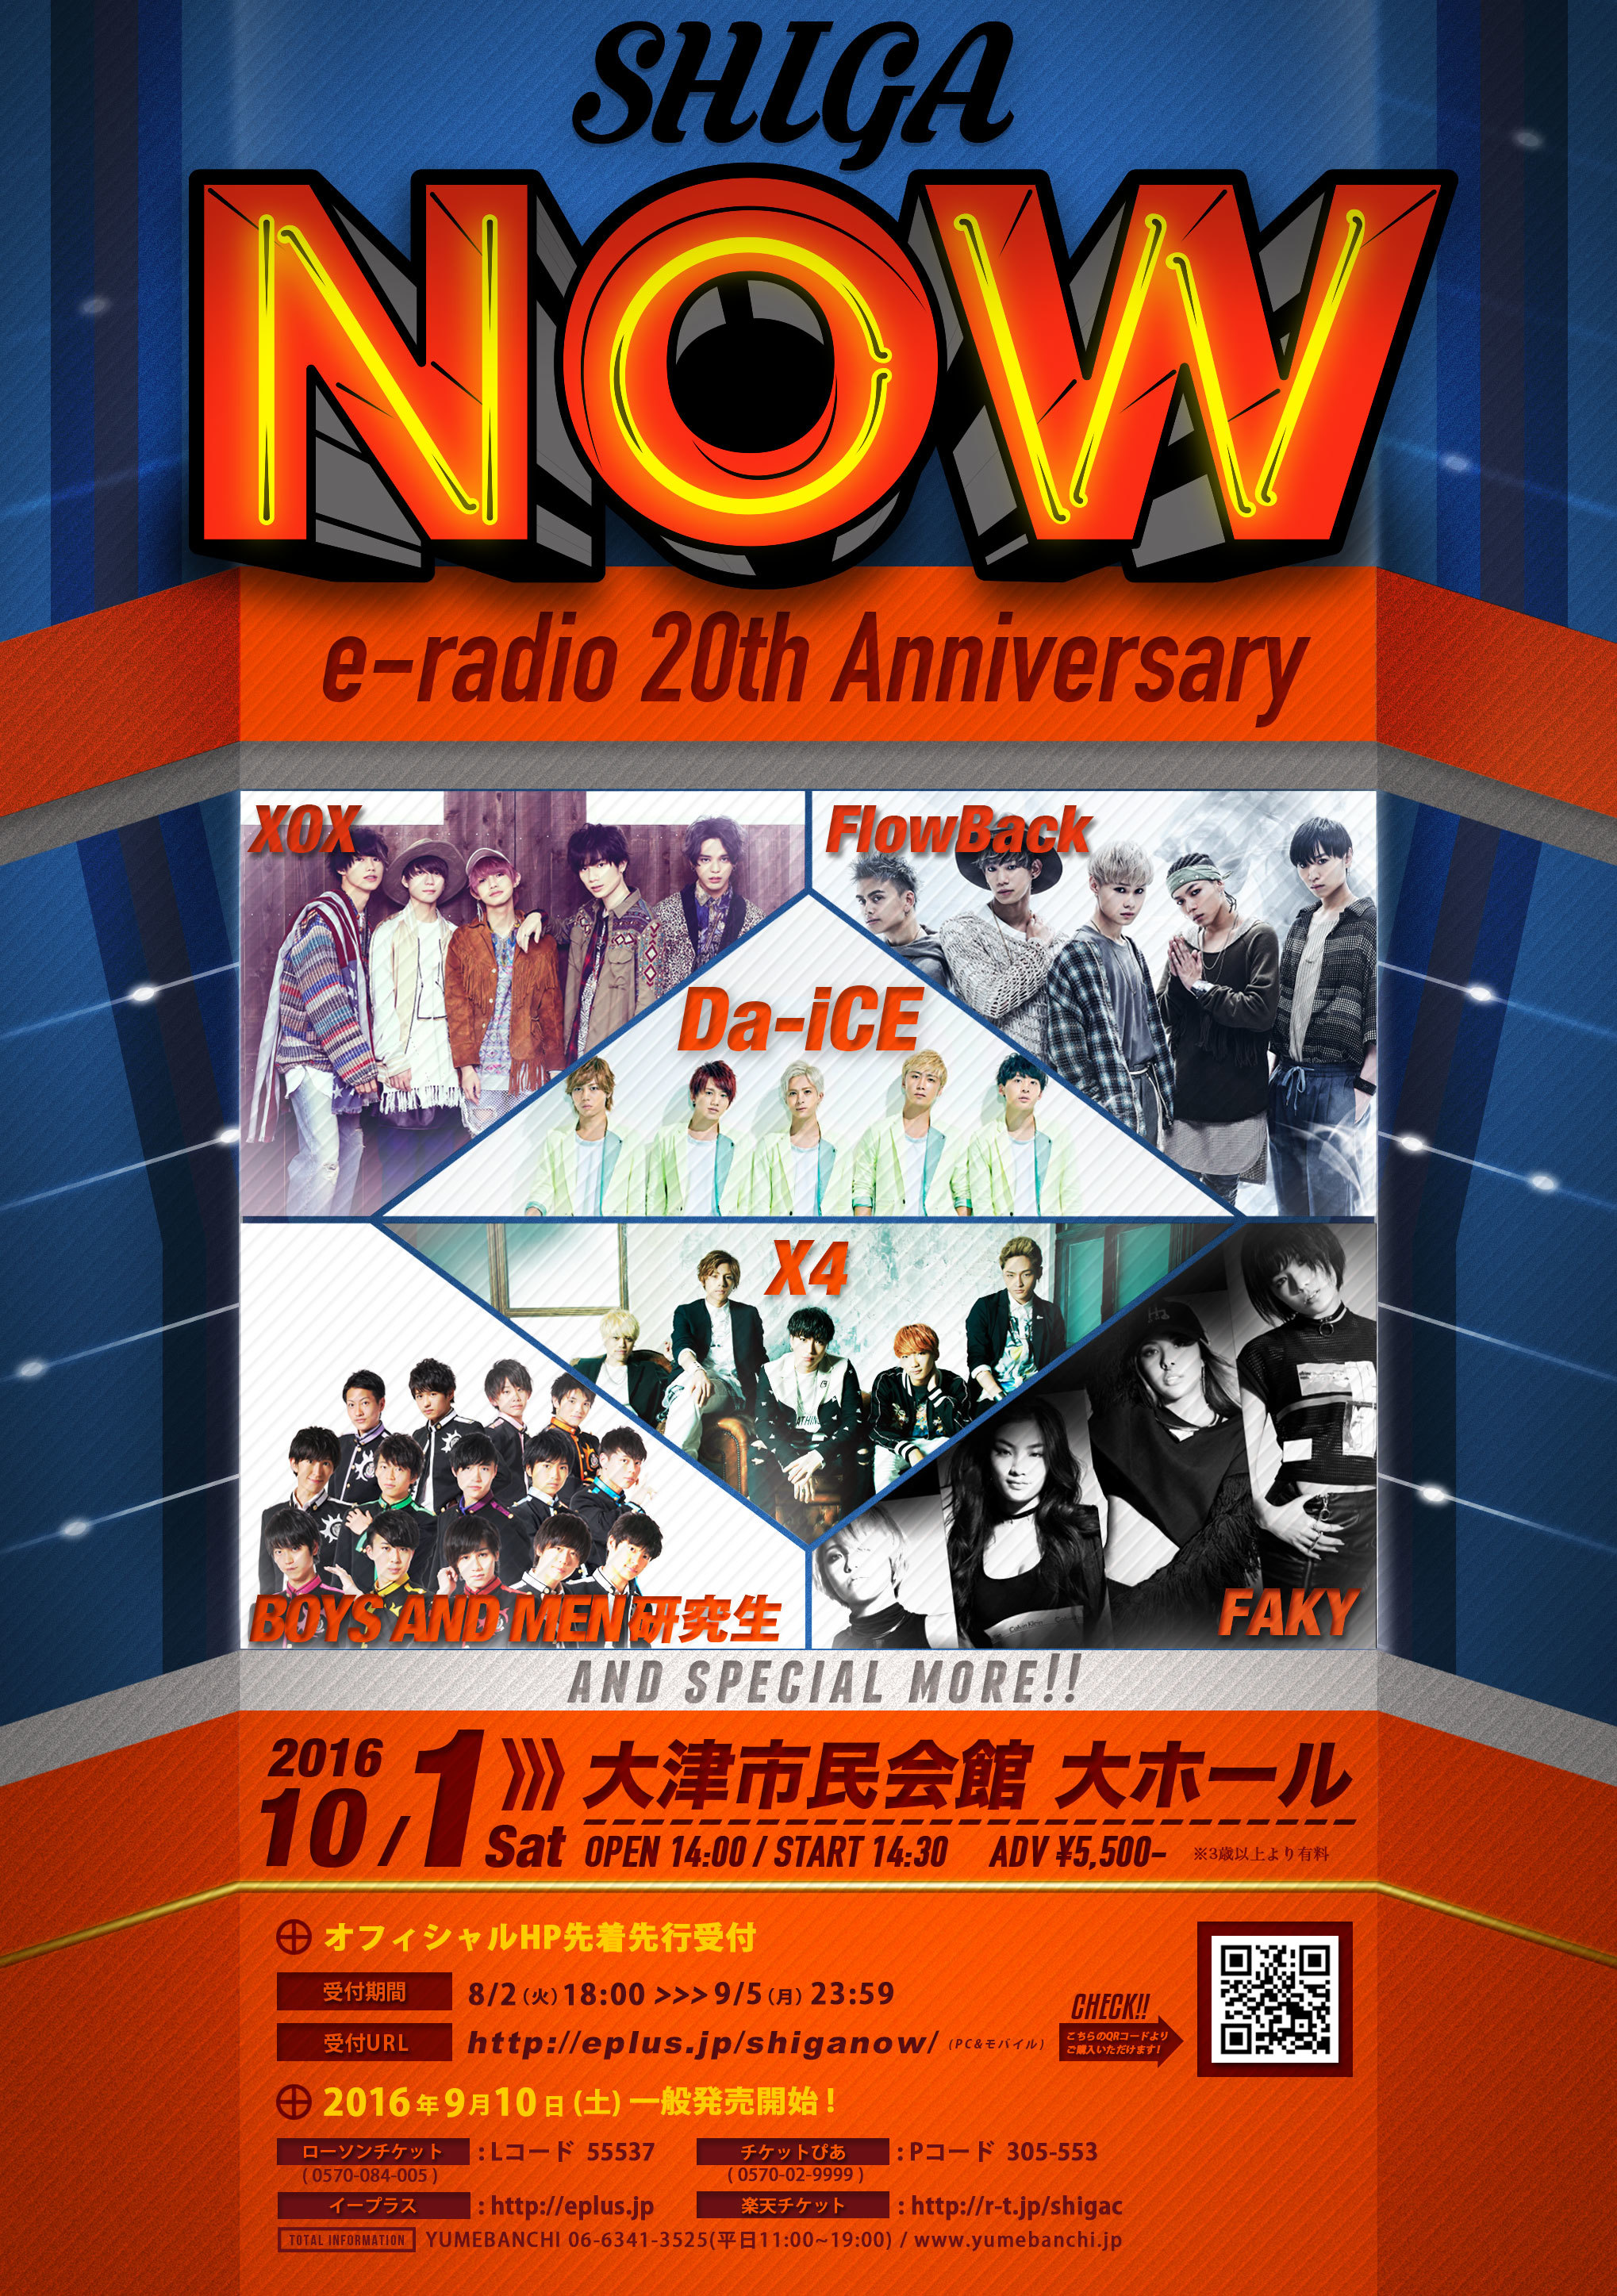 『e-radio 20th Anniversary SHIGA NOW』